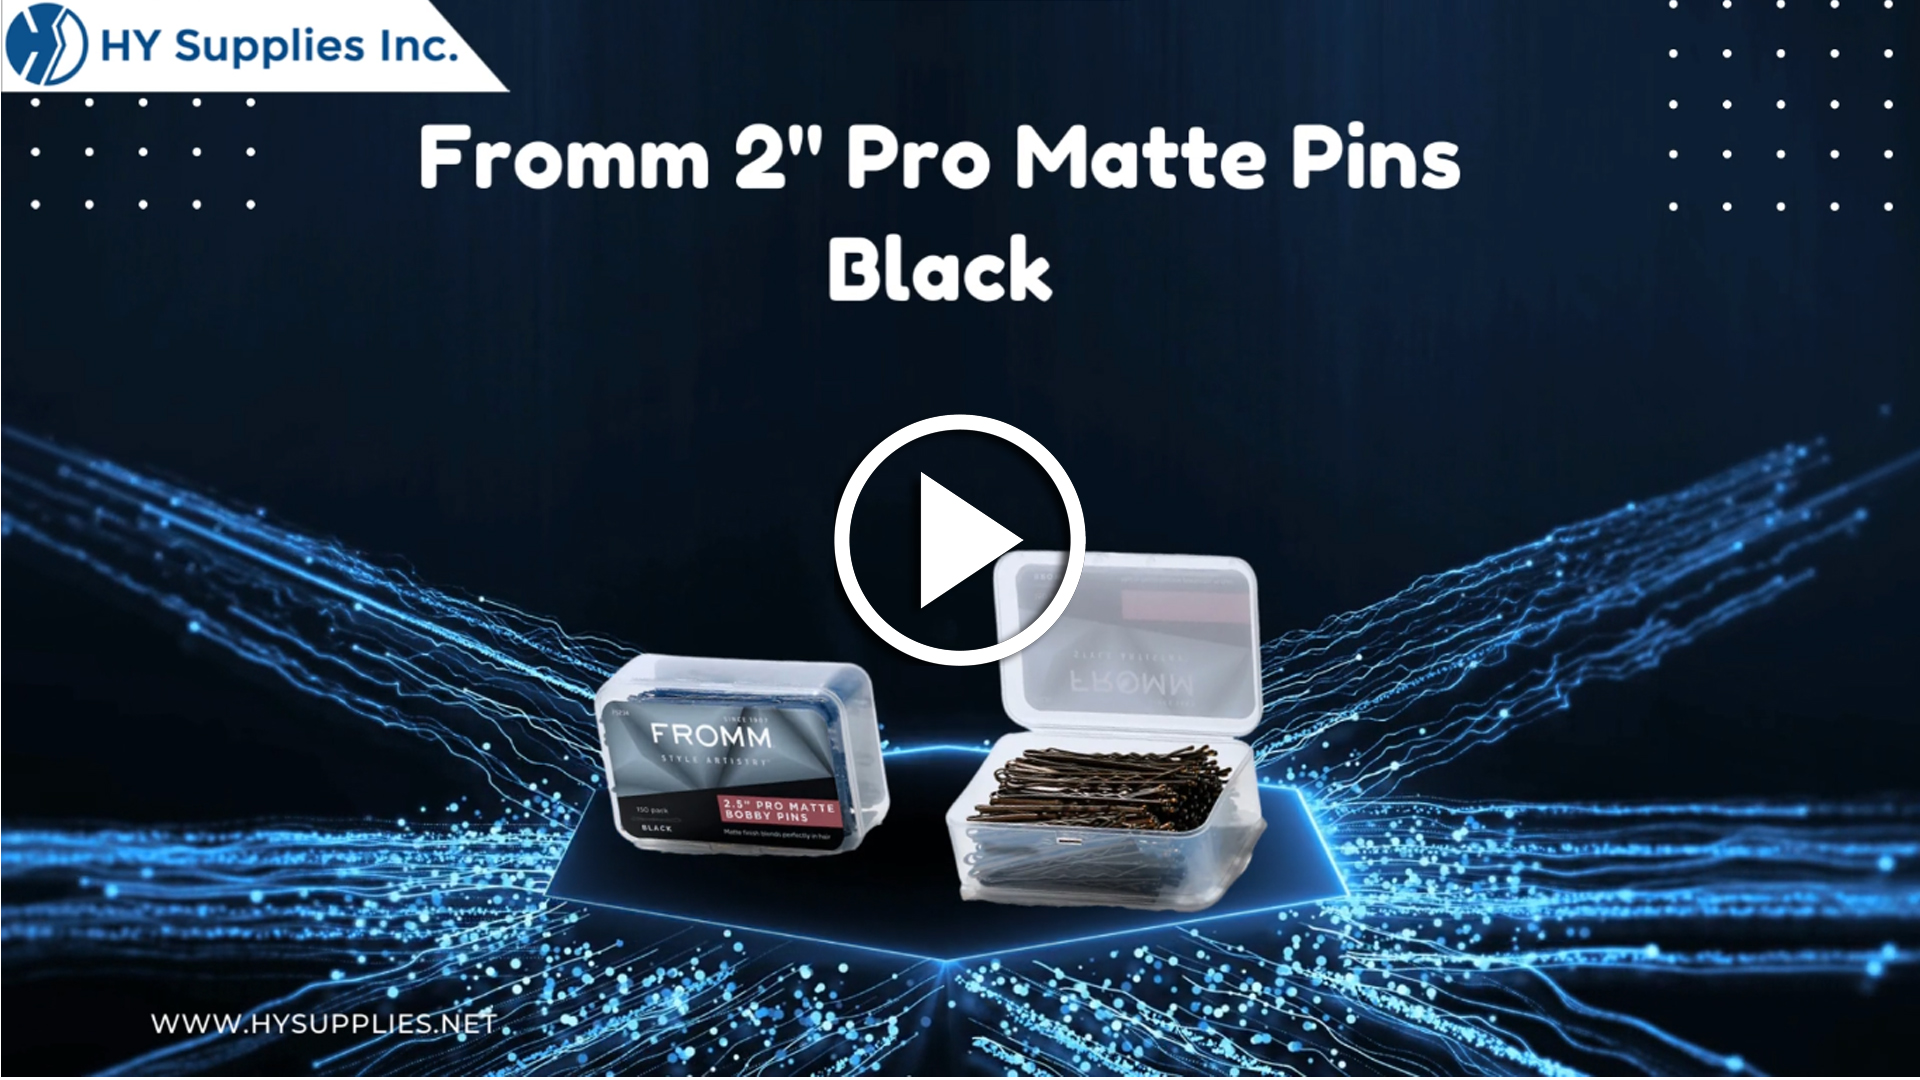 Fromm 2" Pro Matte Pins Black